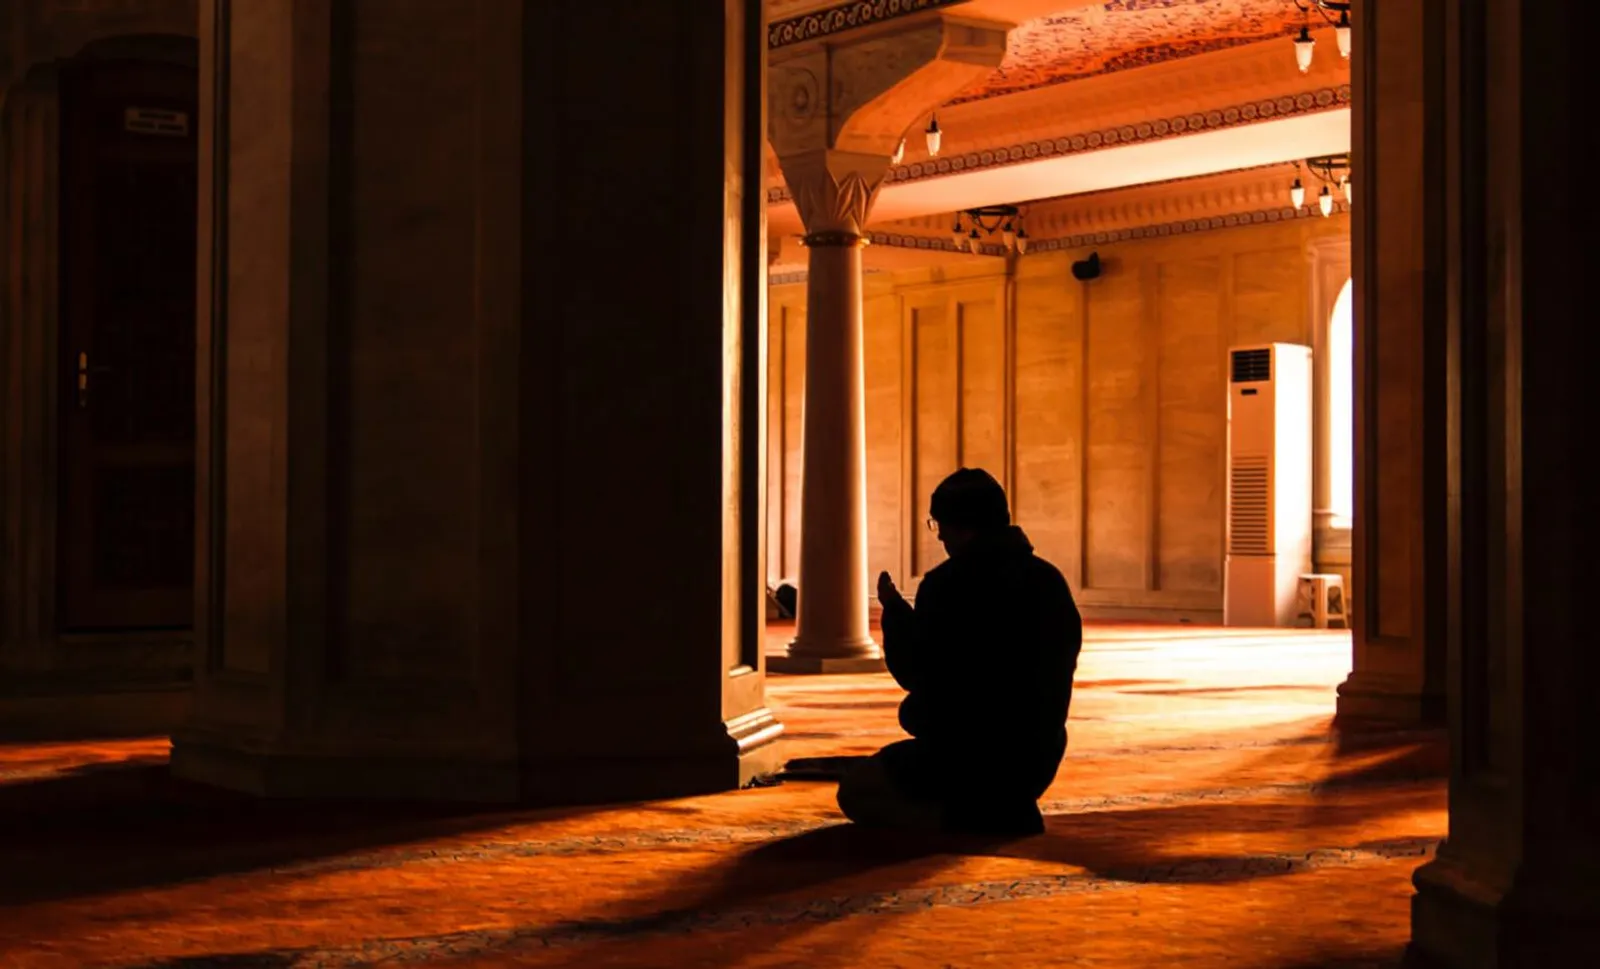 11 Cara Memuaskan Suami di Ranjang Sesuai Ajaran Islam 